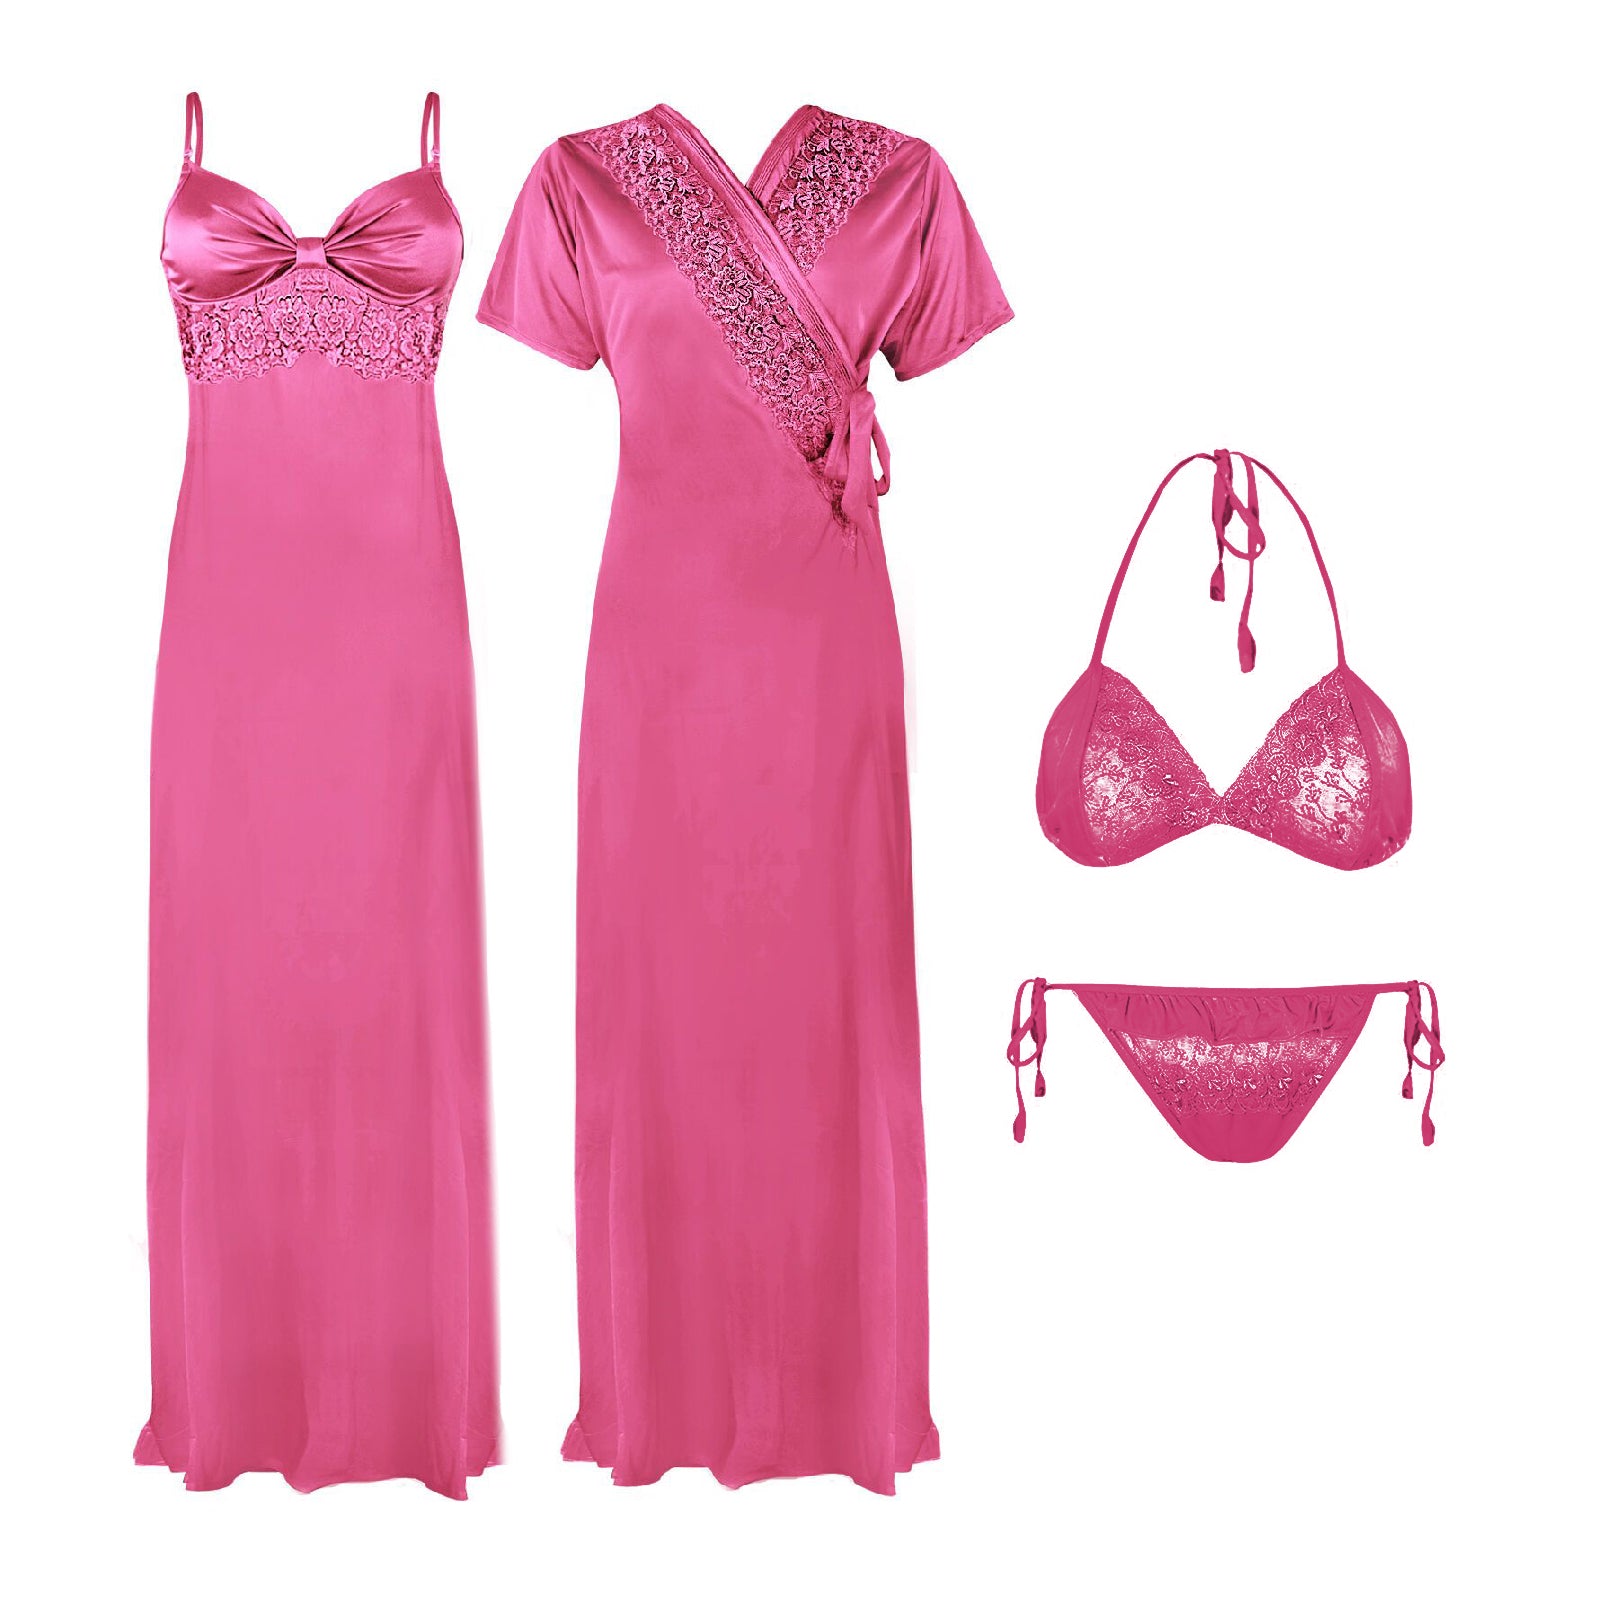 Pink / One Size Ladies Full Length Pink/ Black Satin Chemise Nightdress Nighty 4 Pcs The Orange Tags